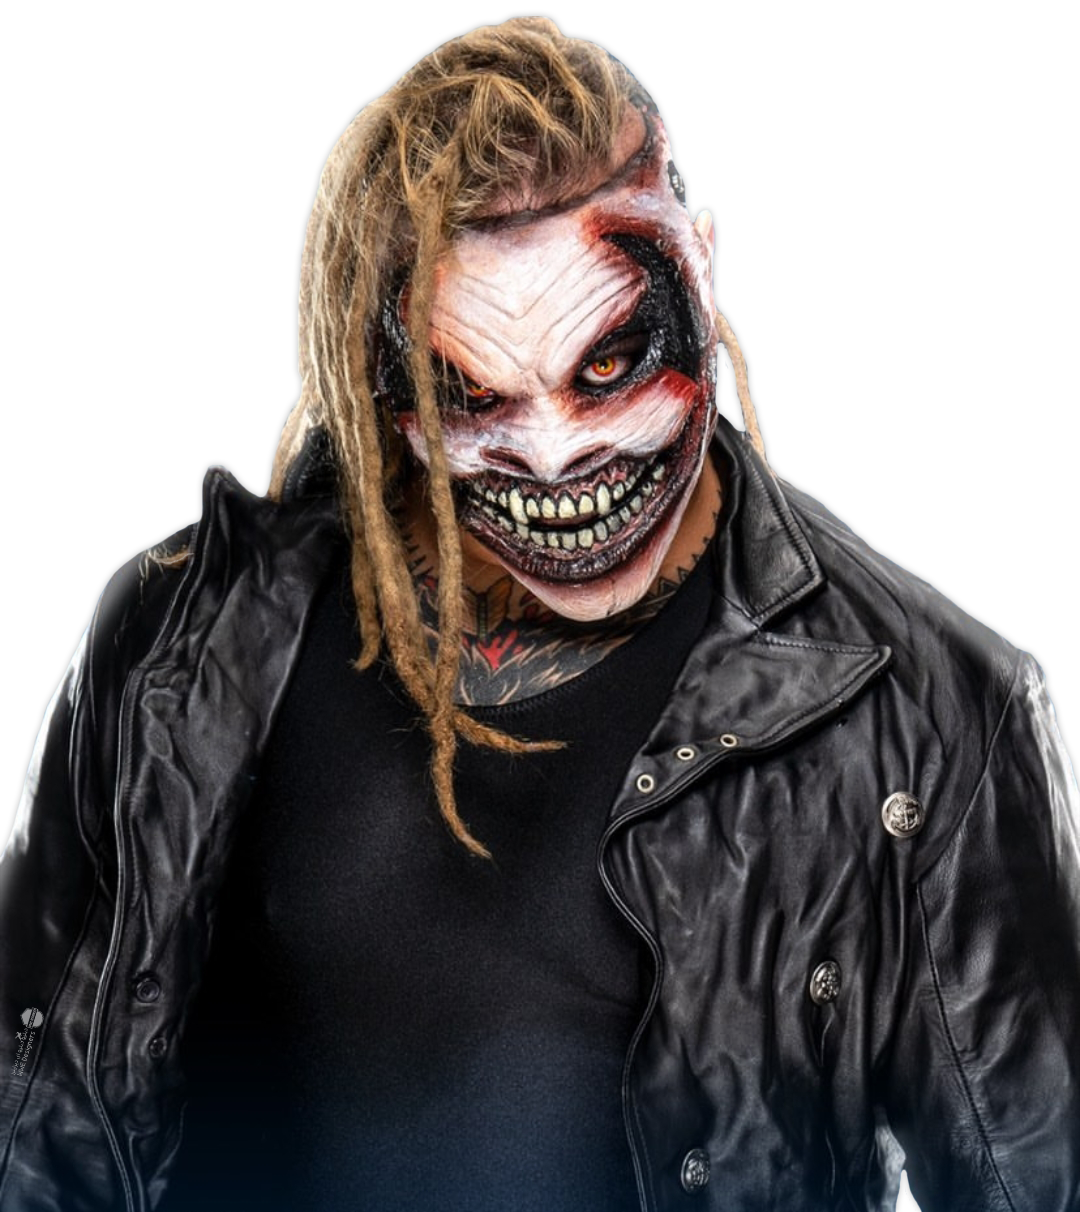 WWE Bray Wyatt The Fiend 8x10 Photo 3811 ALMOST GONE HURRY!!